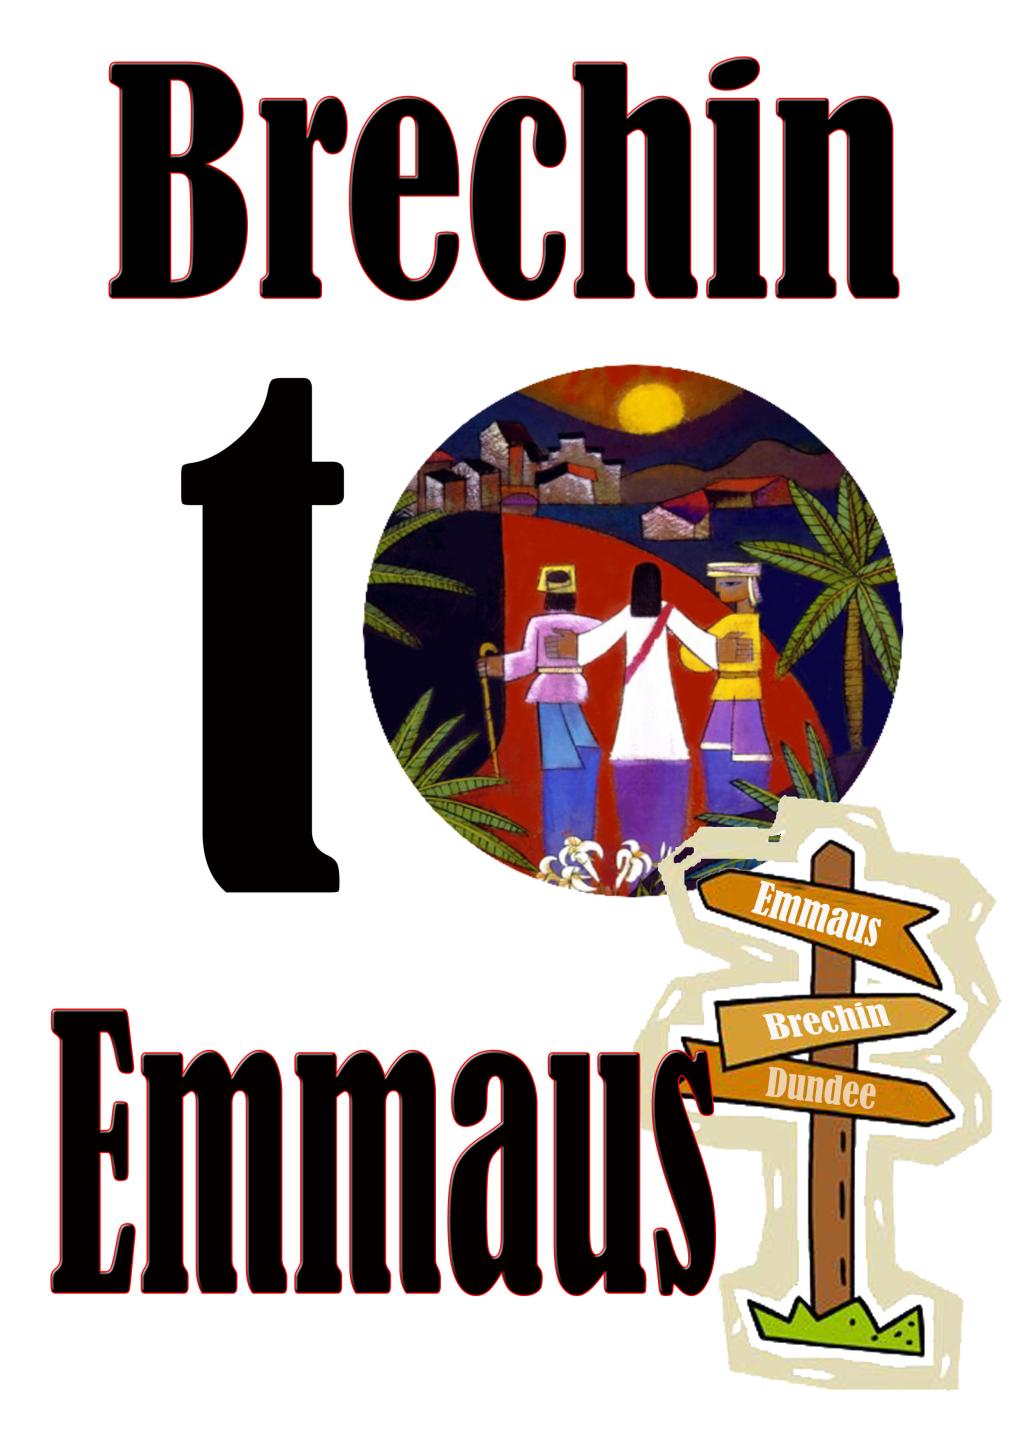 Brechin to Emmaus